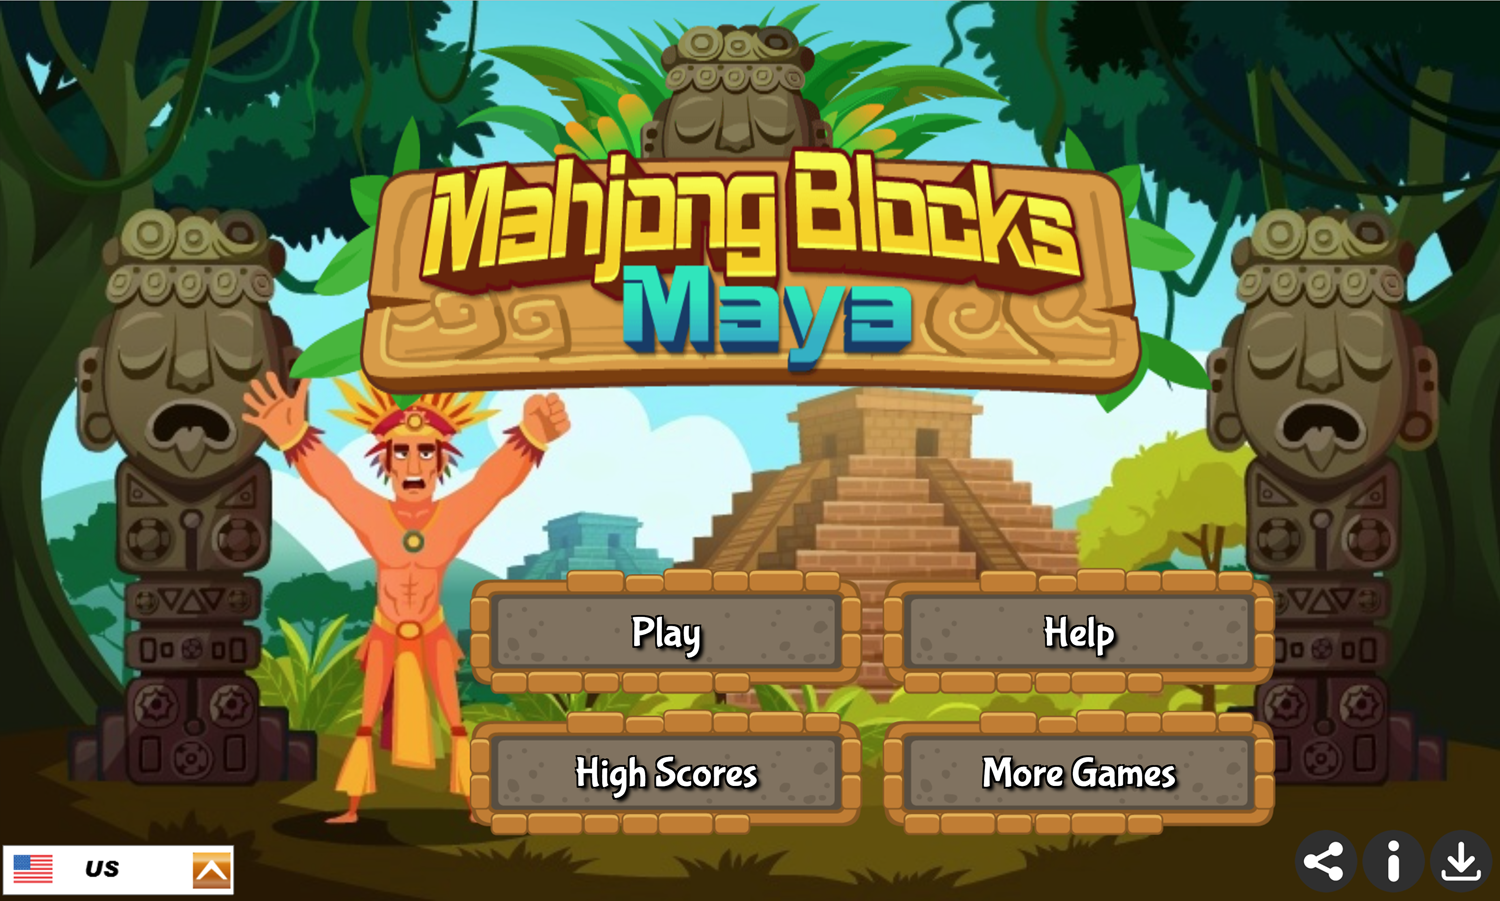 Mahjong Blocks Maya Game Welcome Screen Screenshot.